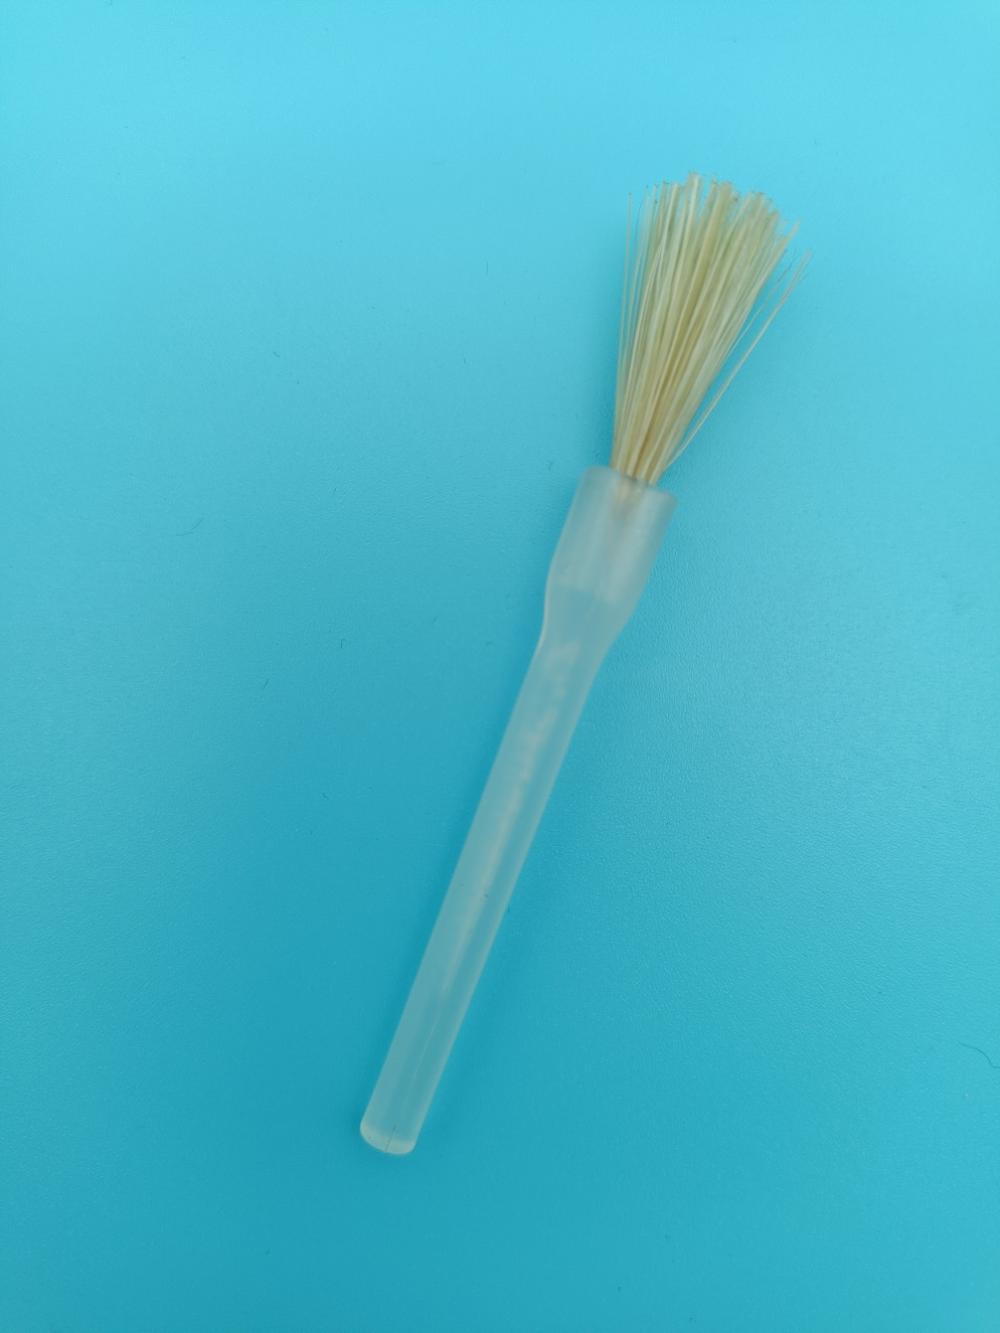 Small size short handle Bristle brush glue brush